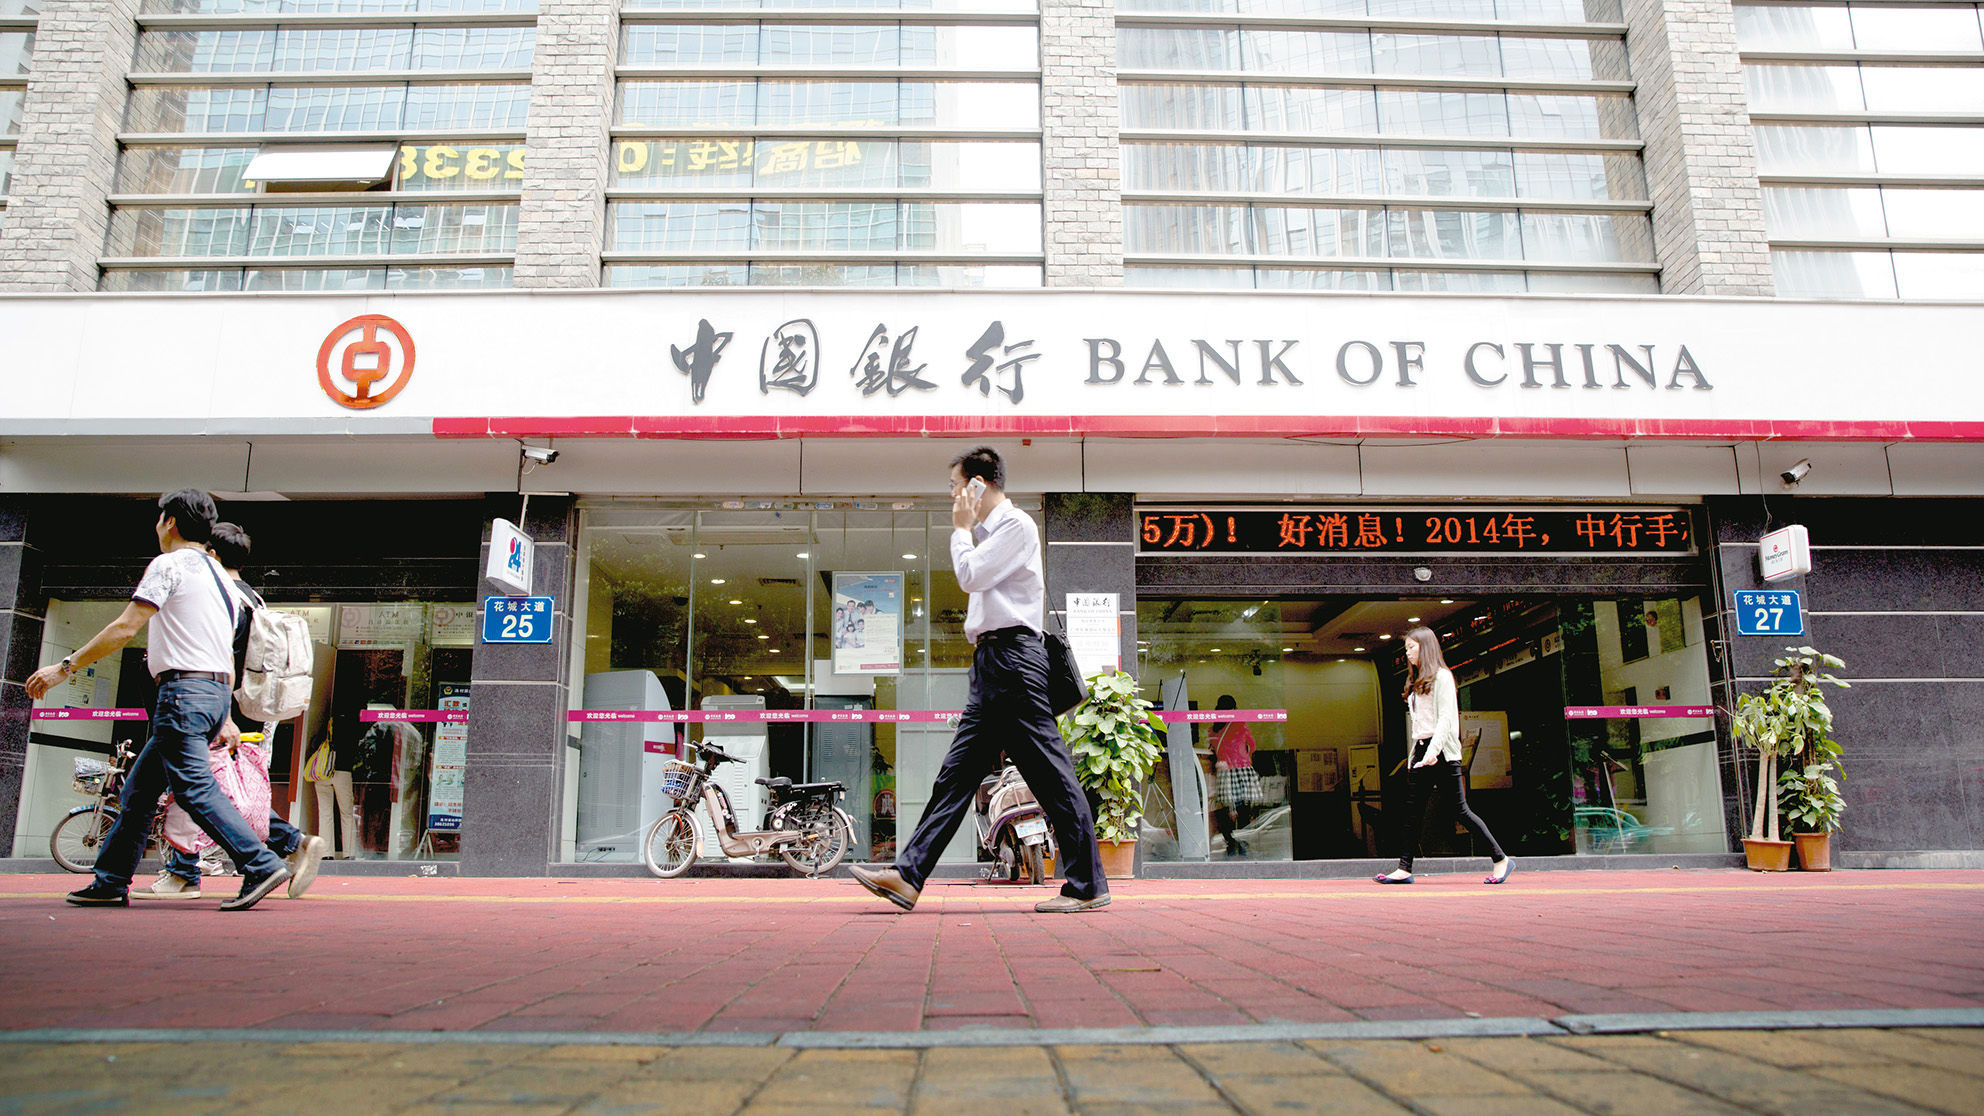 Сайт банка китая. Банк Китая. Банк Bank of China. Банк Китая в Москве. Банк Китая элос.